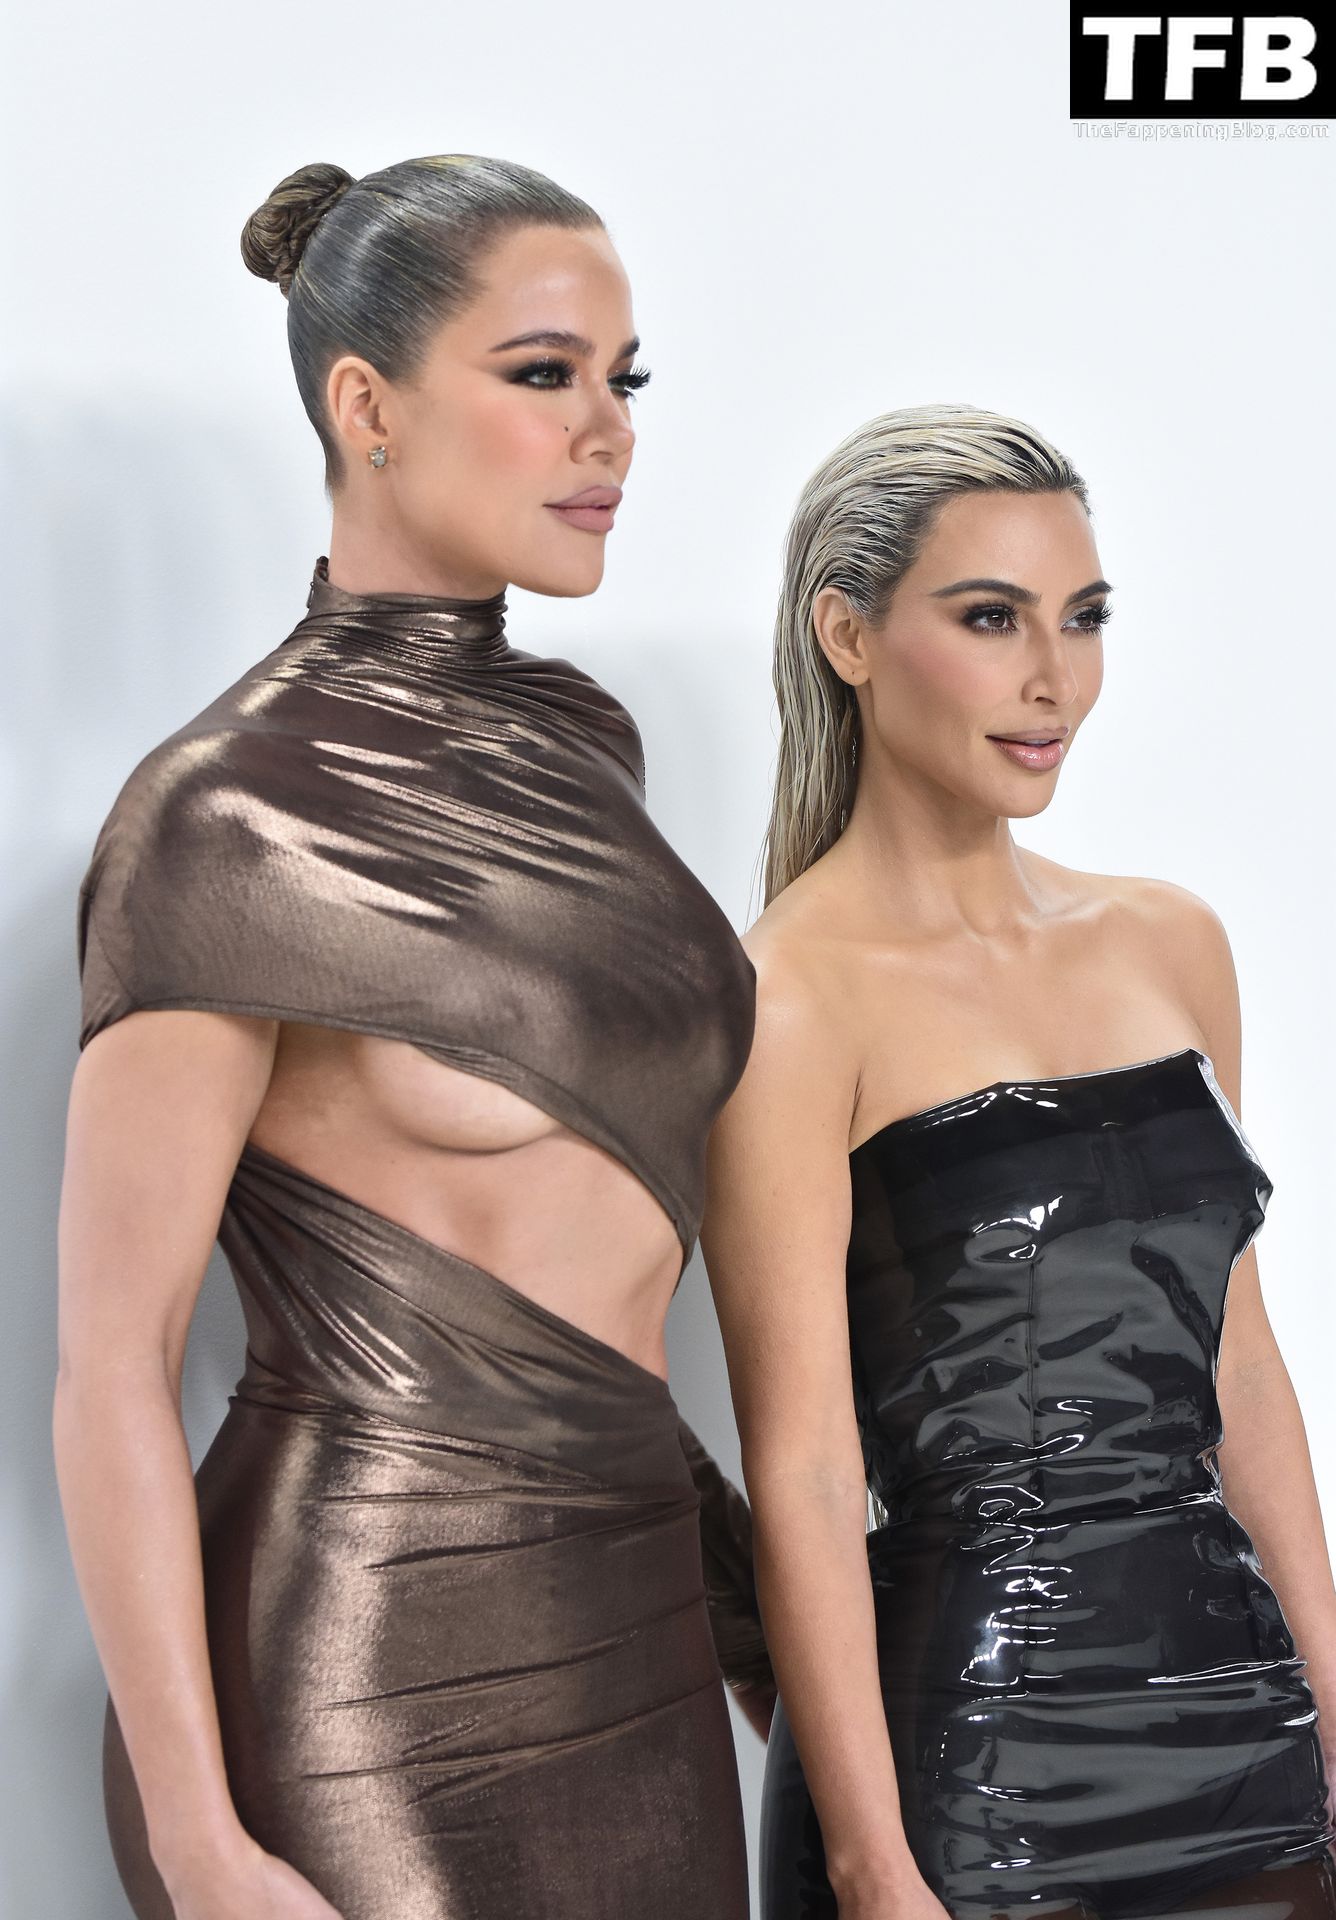 Khloe-Kardashian-Sexy-Tits-The-Fappening-Blog-67.jpg